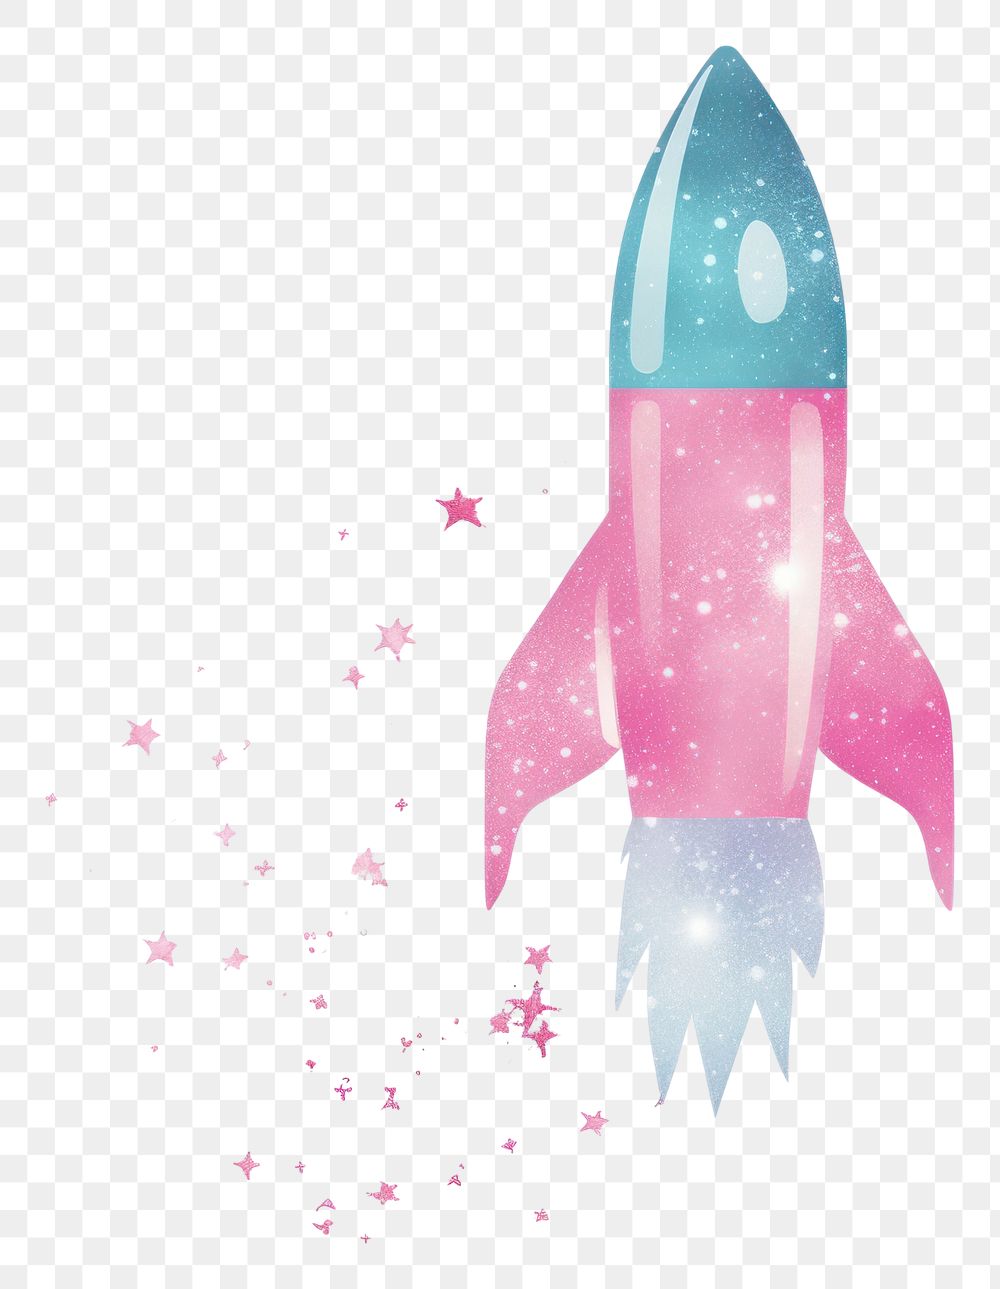 PNG Rocket icon rocket pink white background.